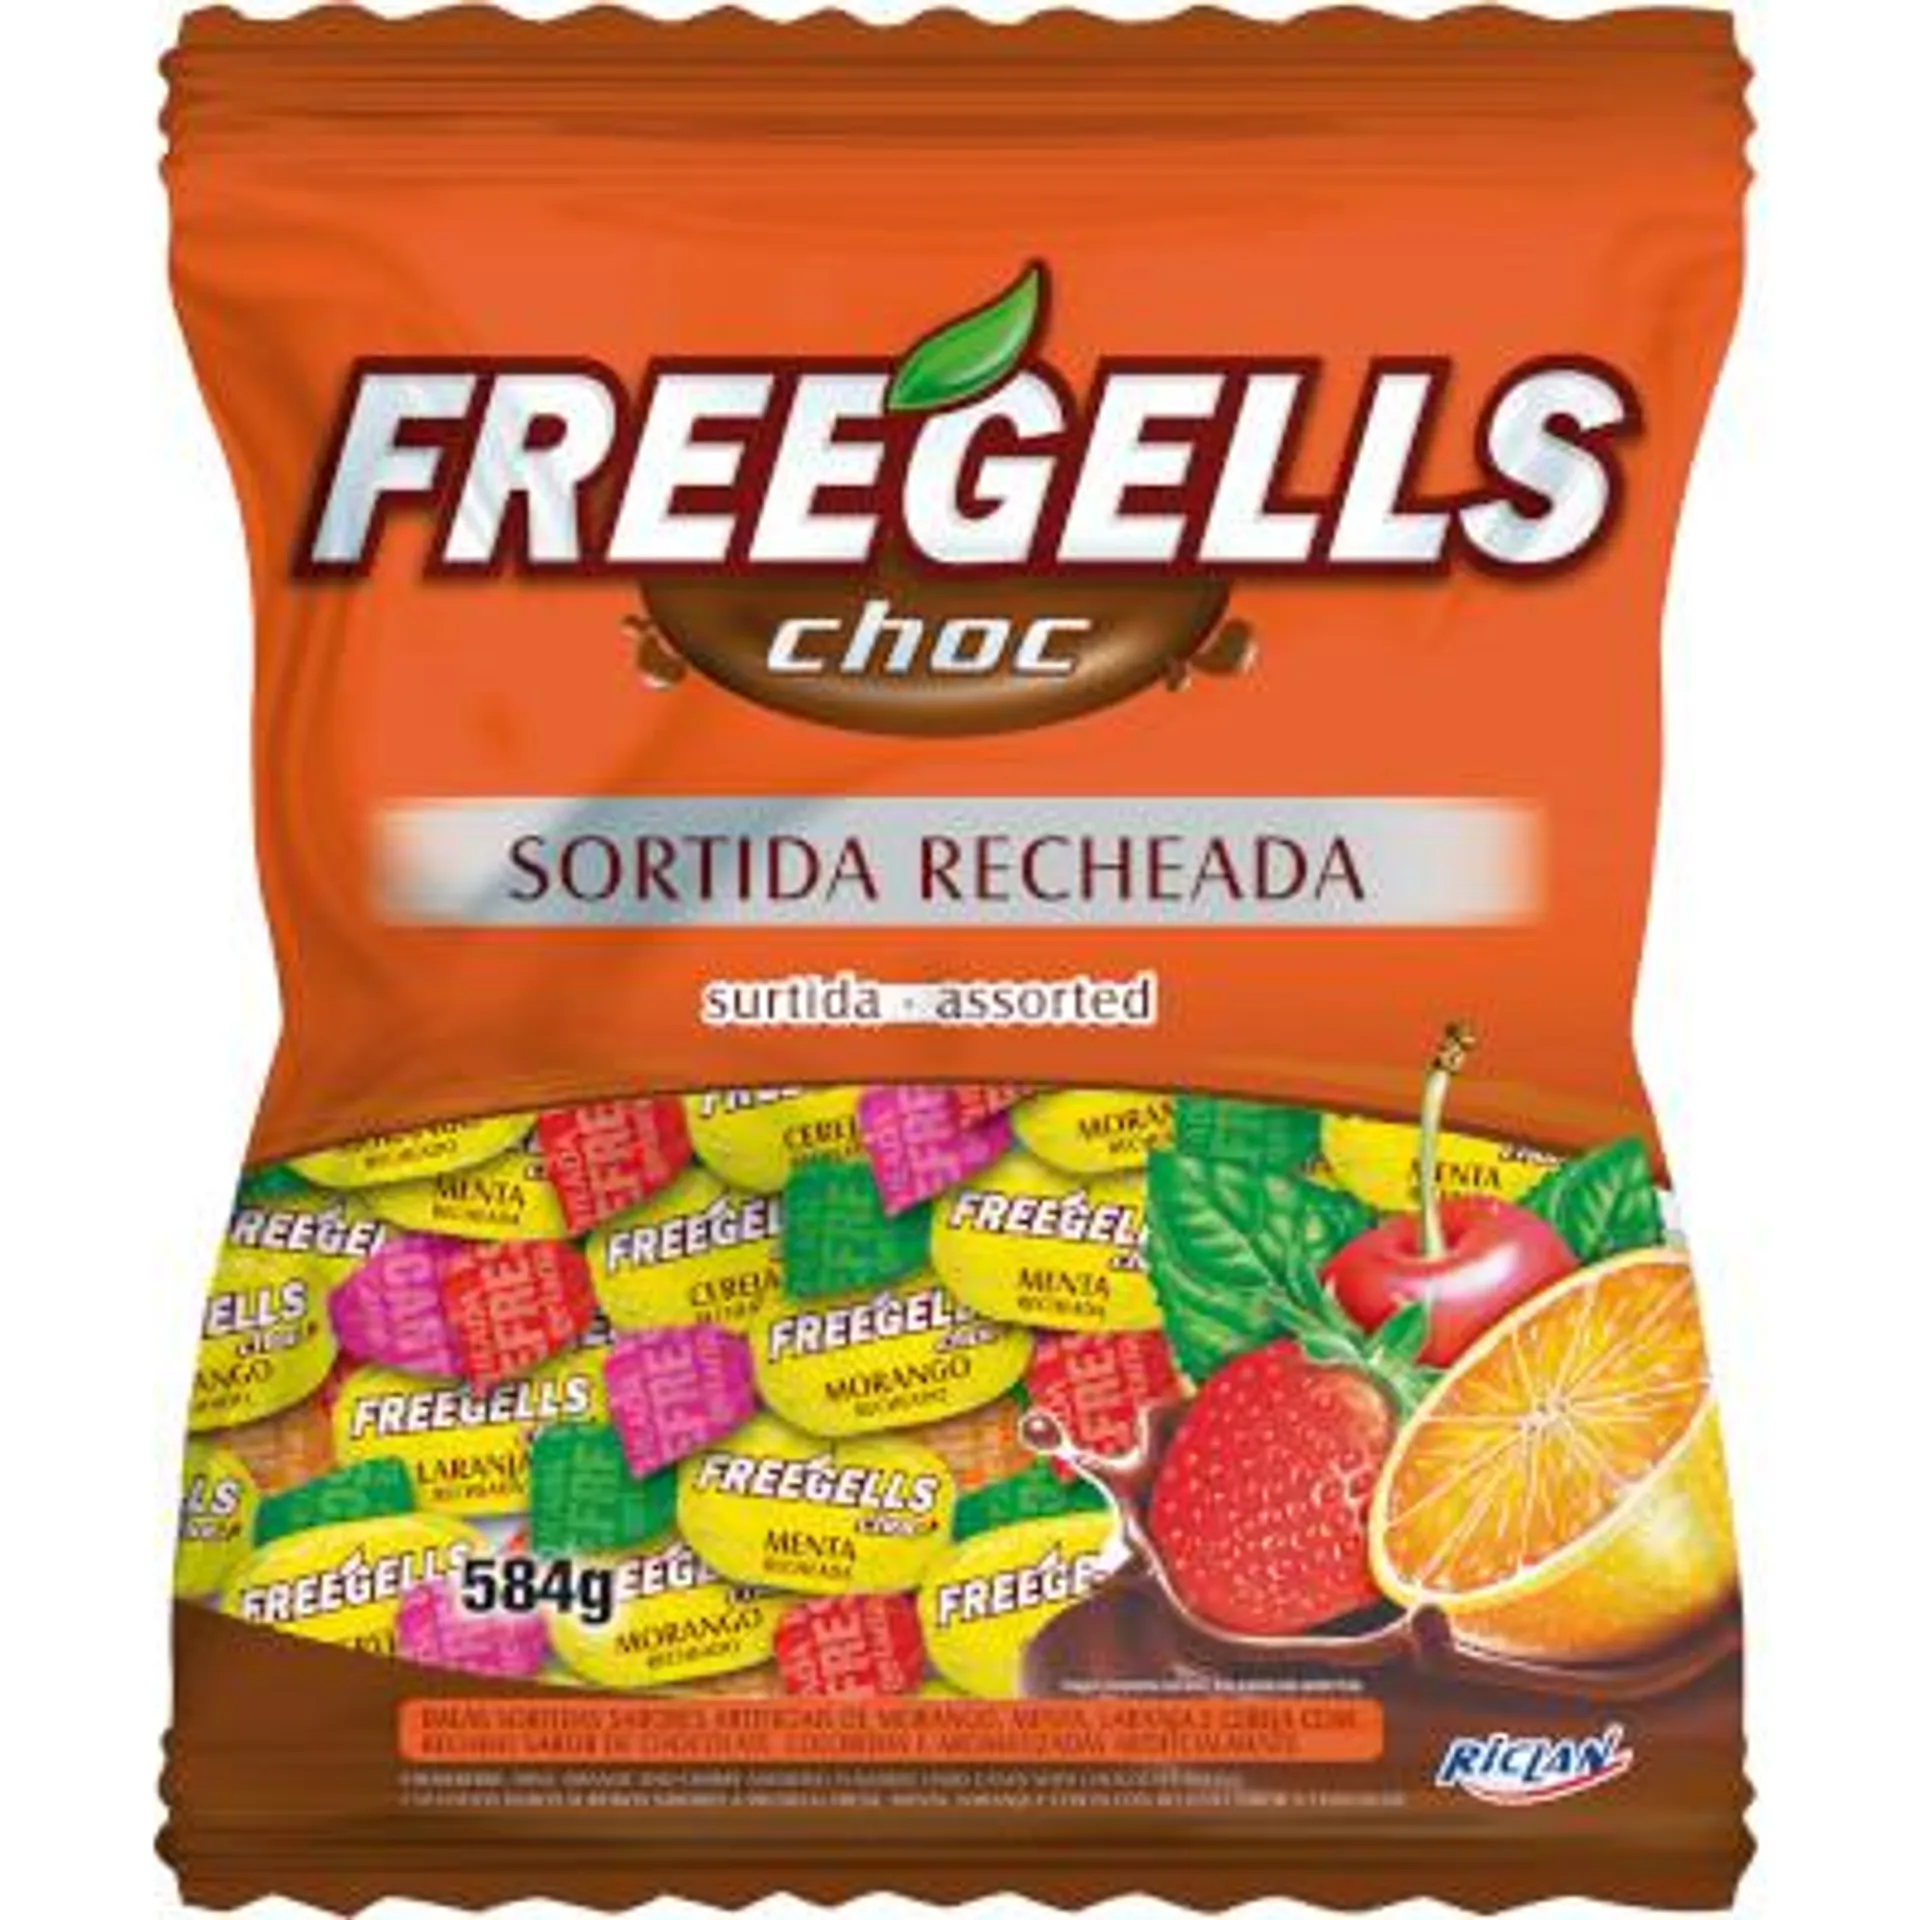 Bala Recheada Sortida pacote 584g - Freegells